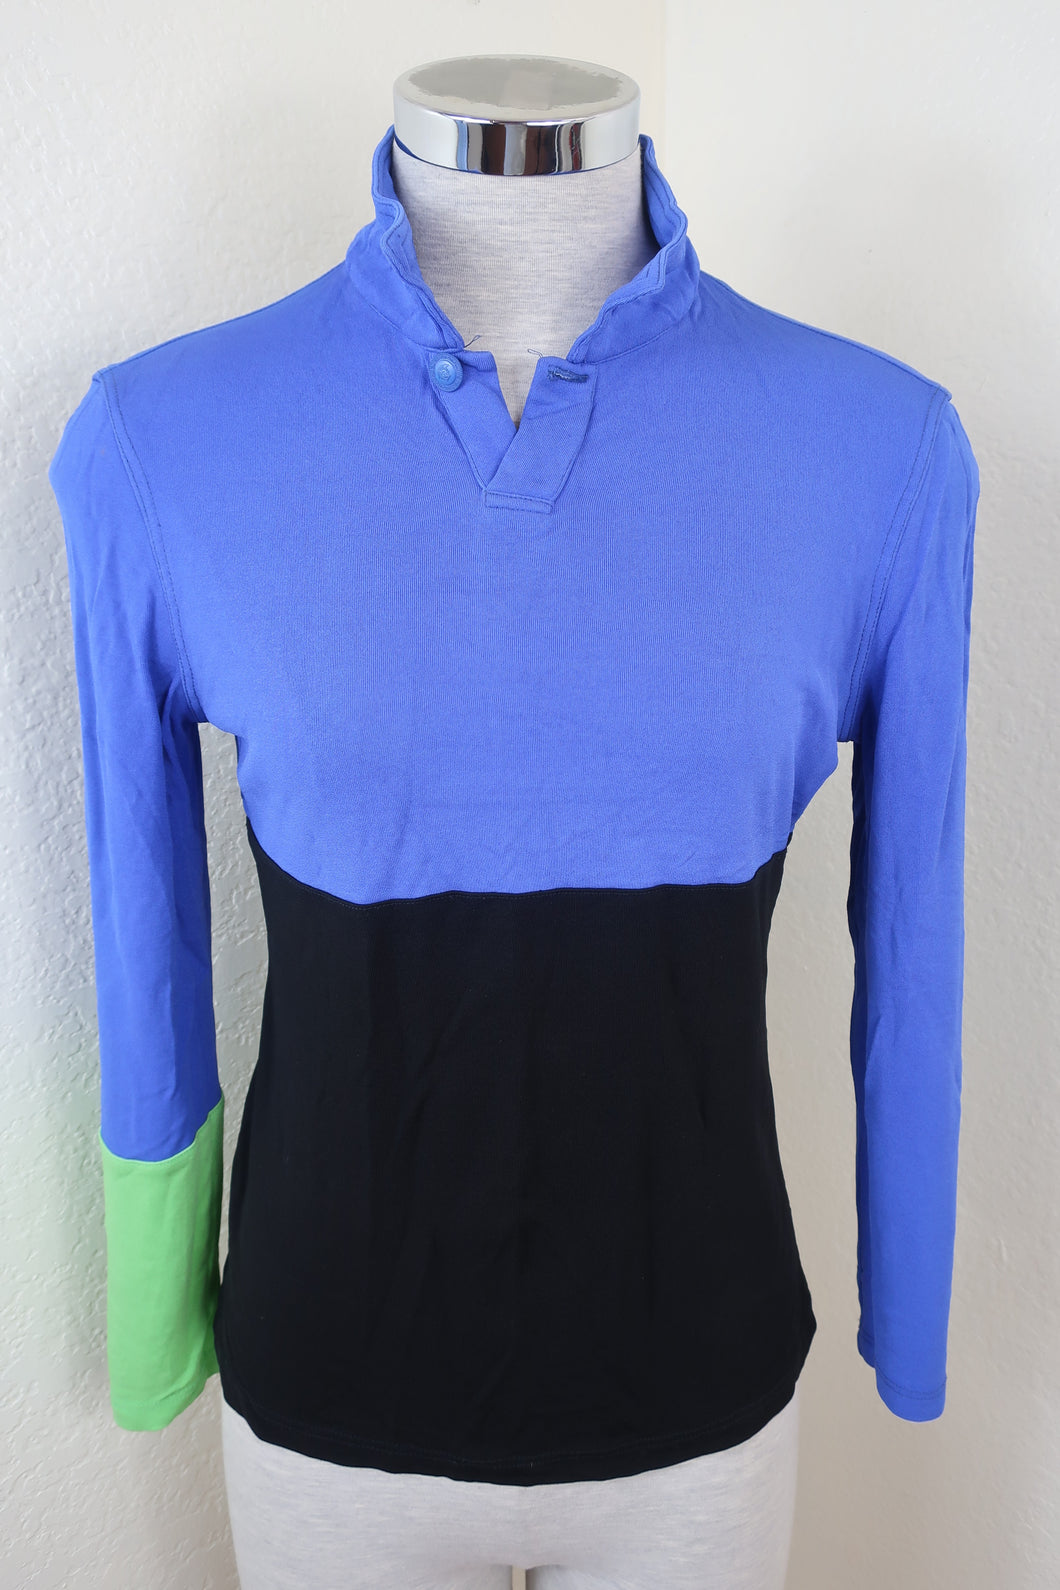 Vintage GIANNI VERSACE Tricolors Long Sleeve Medusa Top Shirt Blouse